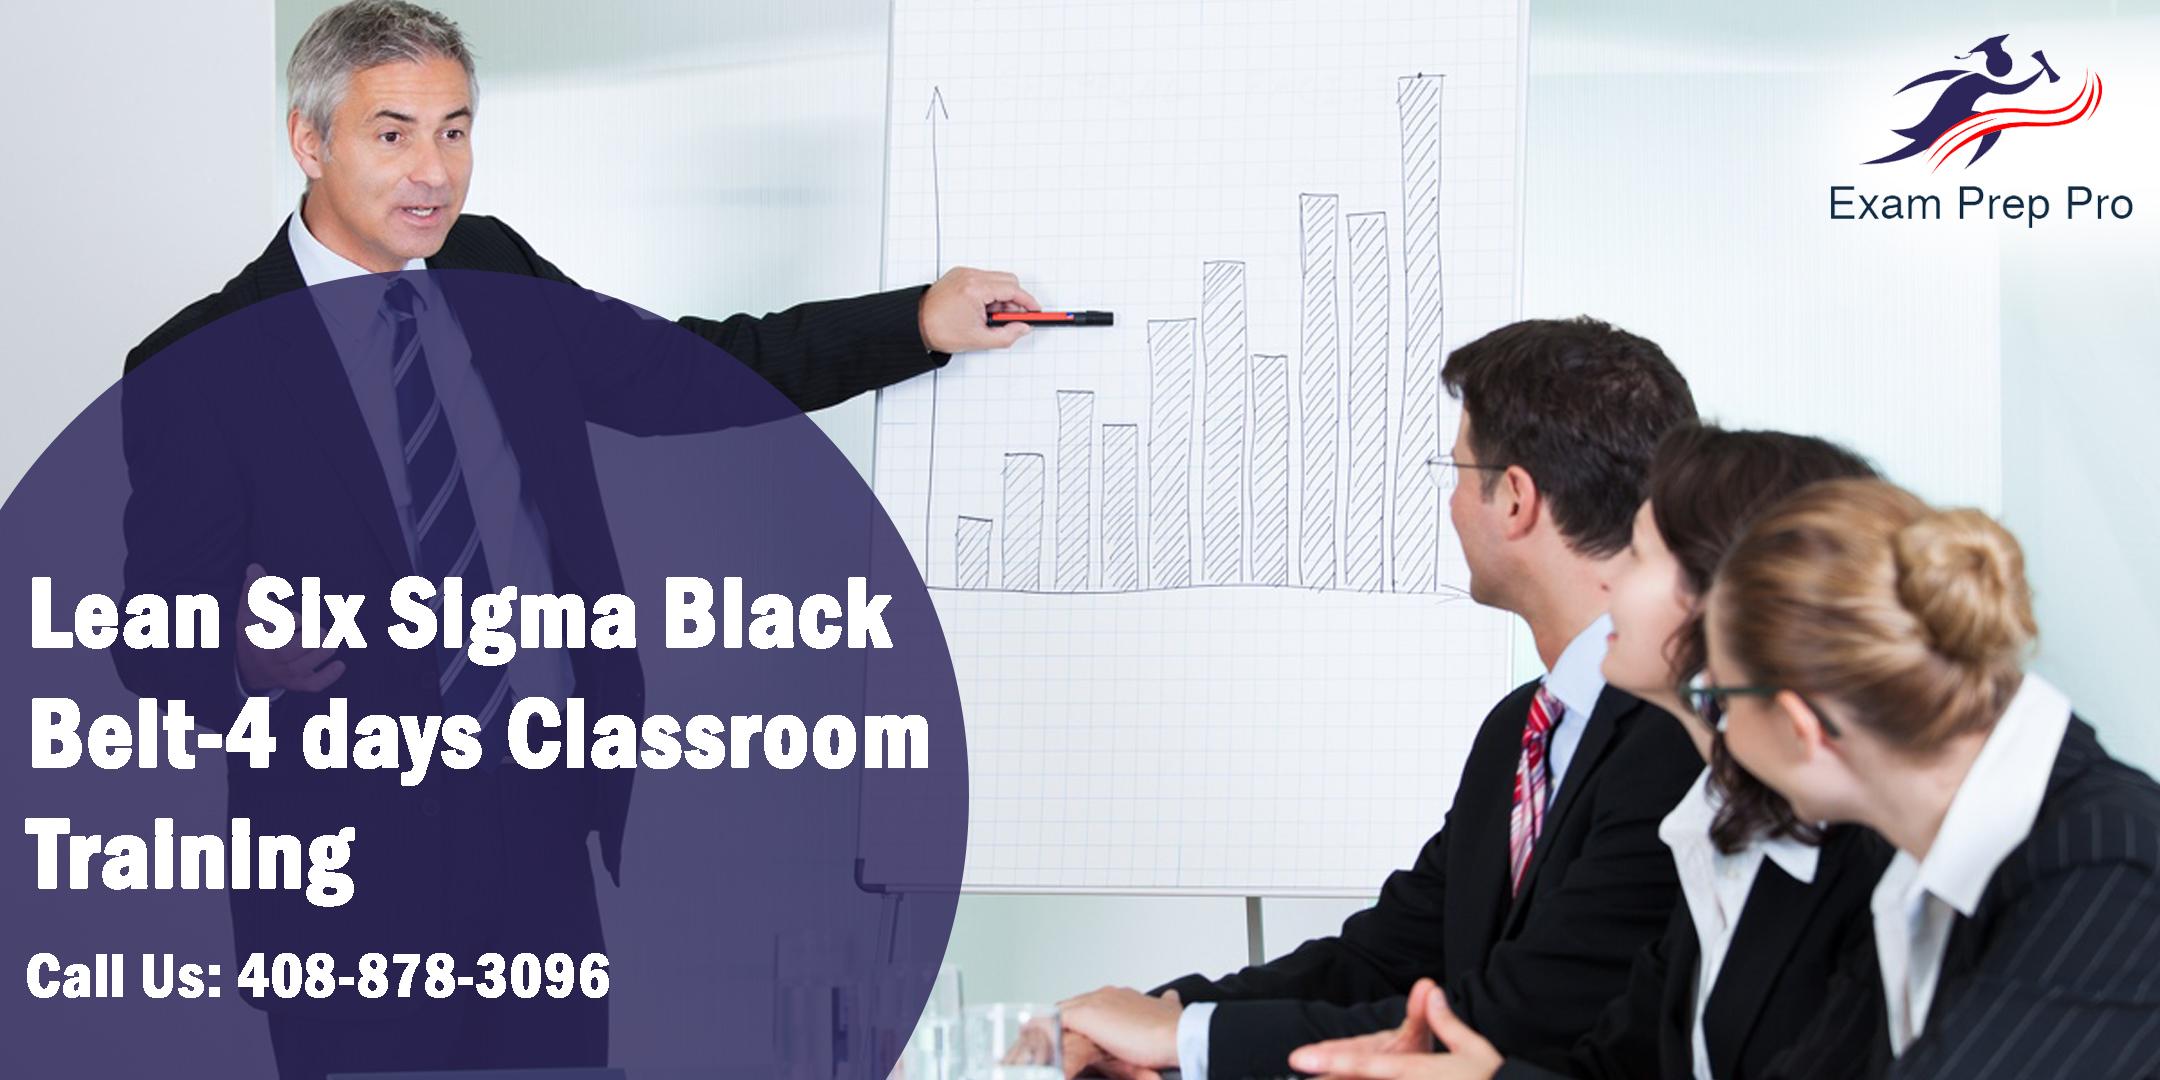 Lean Six Sigma Black Belt-4 days Classroom Training in Fargo